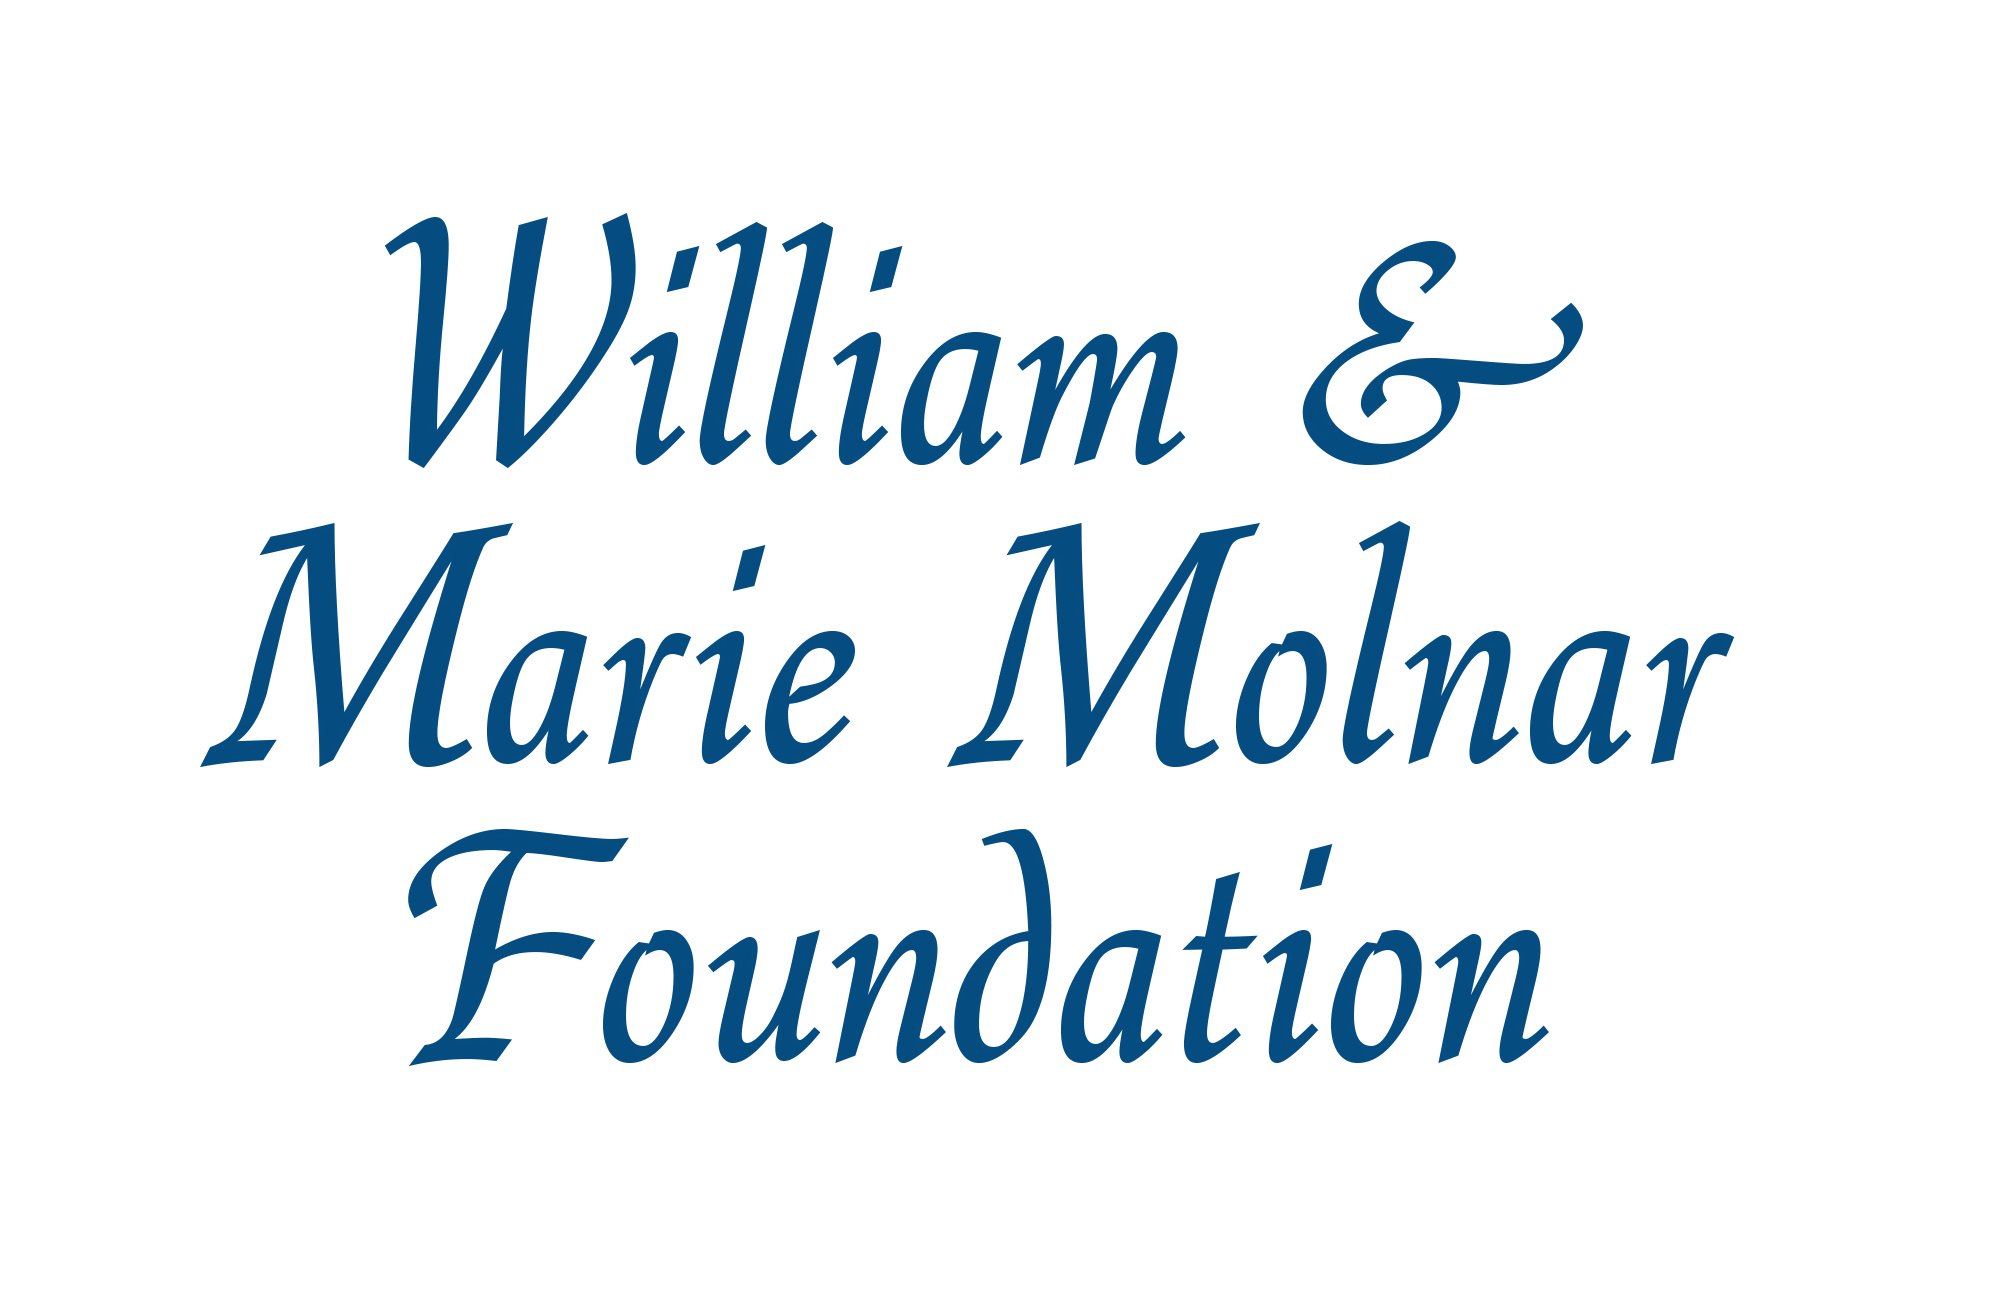 Molnar_Foundation